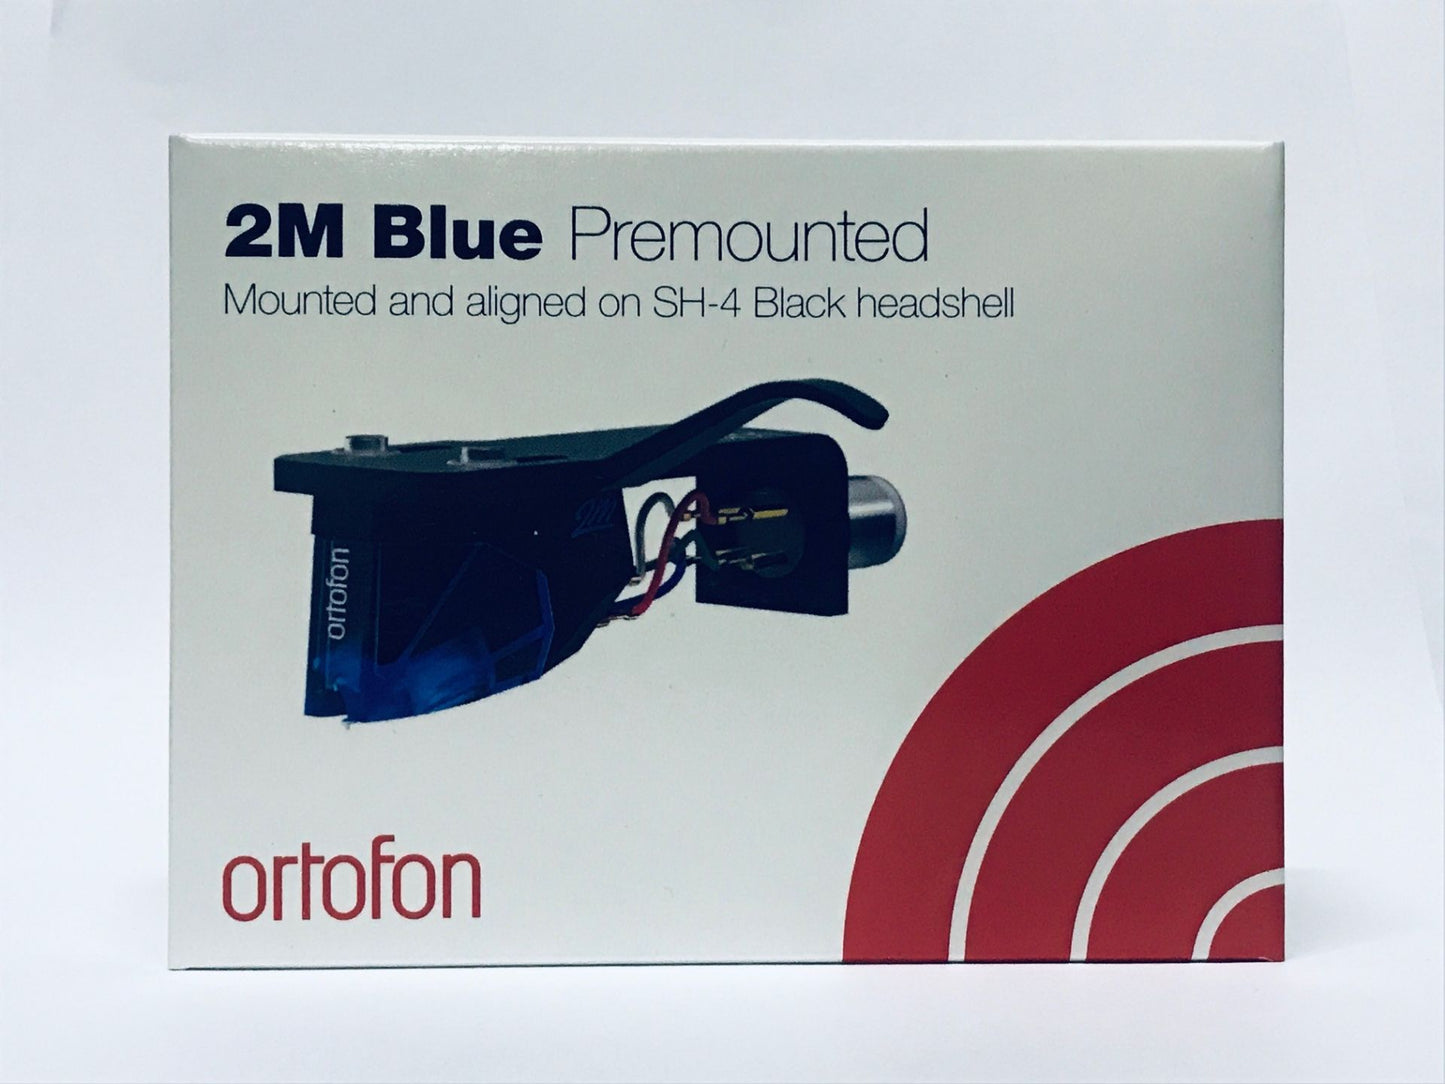 2M Blue Premounted (2M Blue + SH-4 Black)